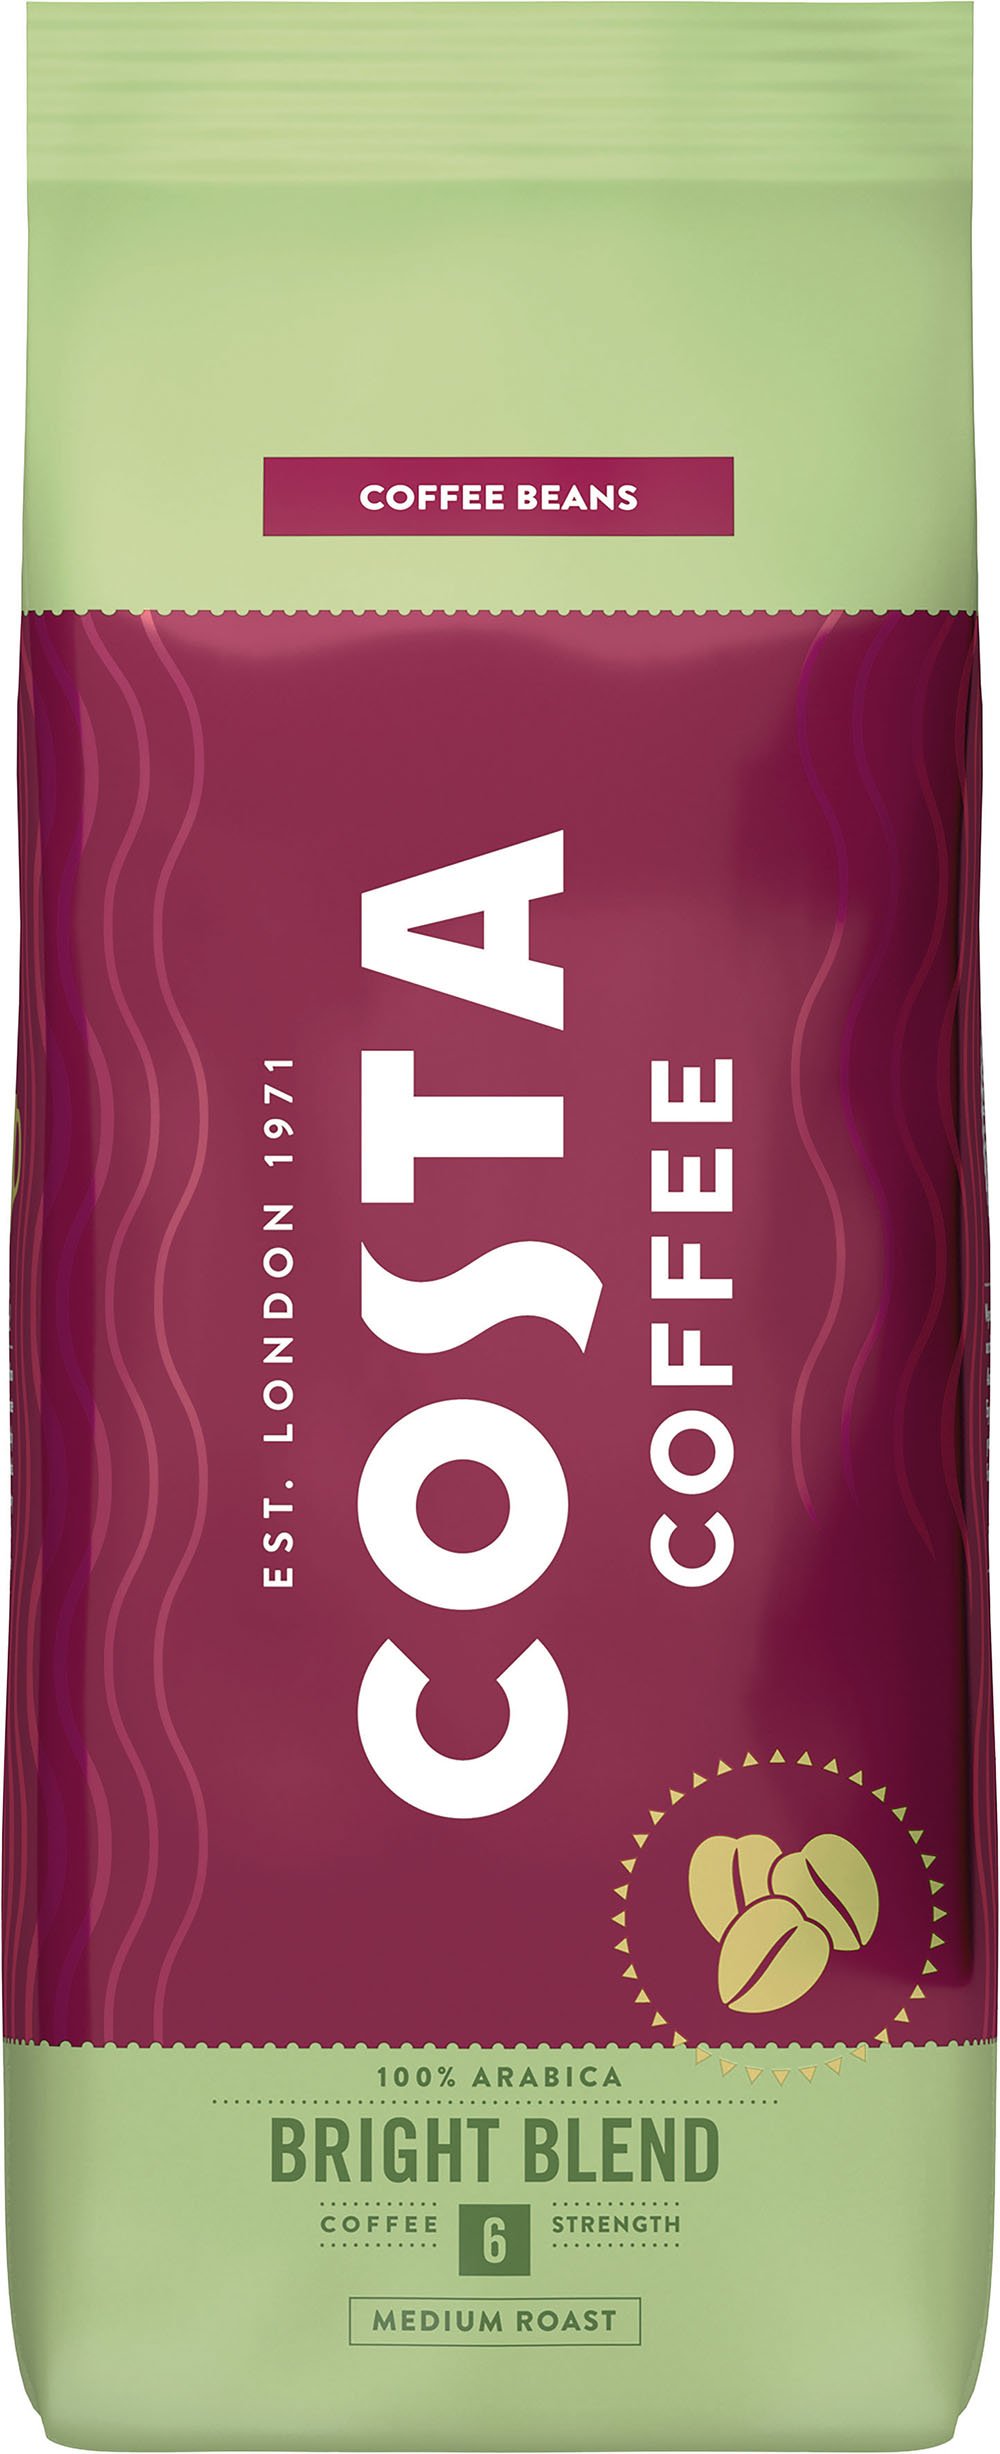 1kg_COSTA COFFEE_ziarnista_BAG_BRIGHT BLEND_FRONT copy